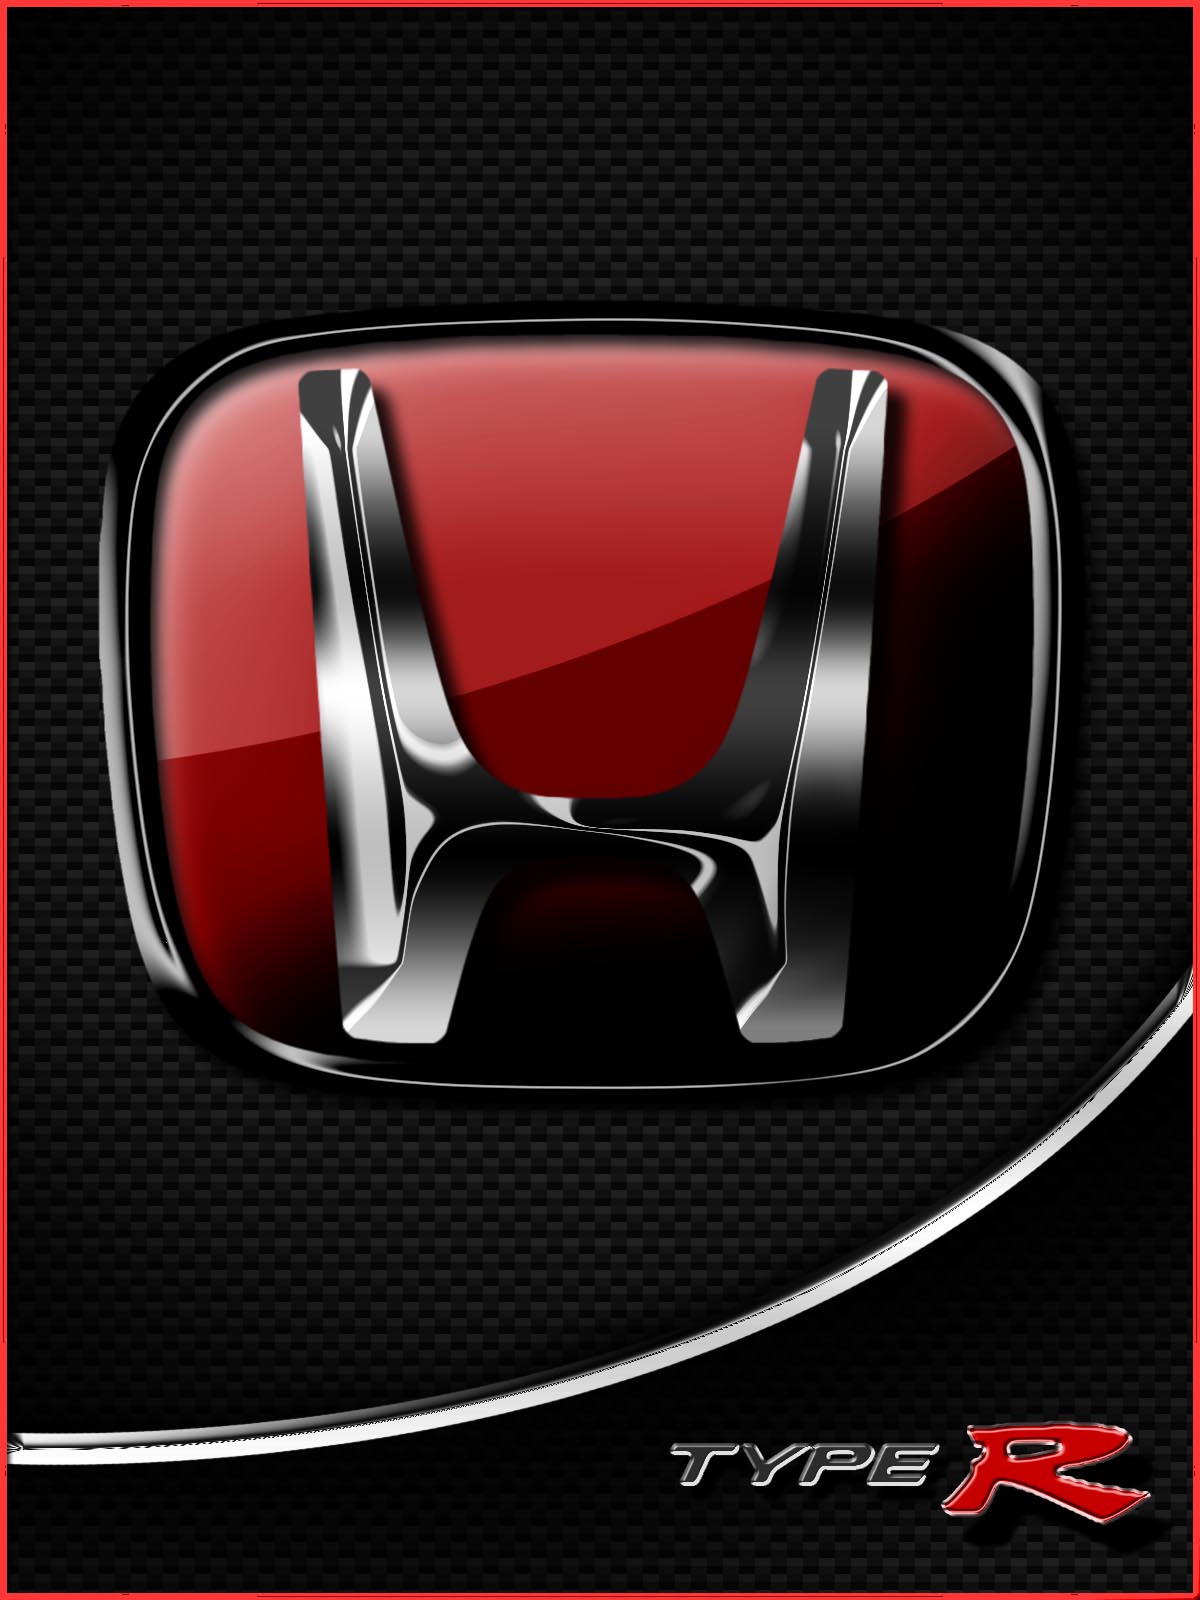 Honda Logo Picture Res News Specs Buy Car